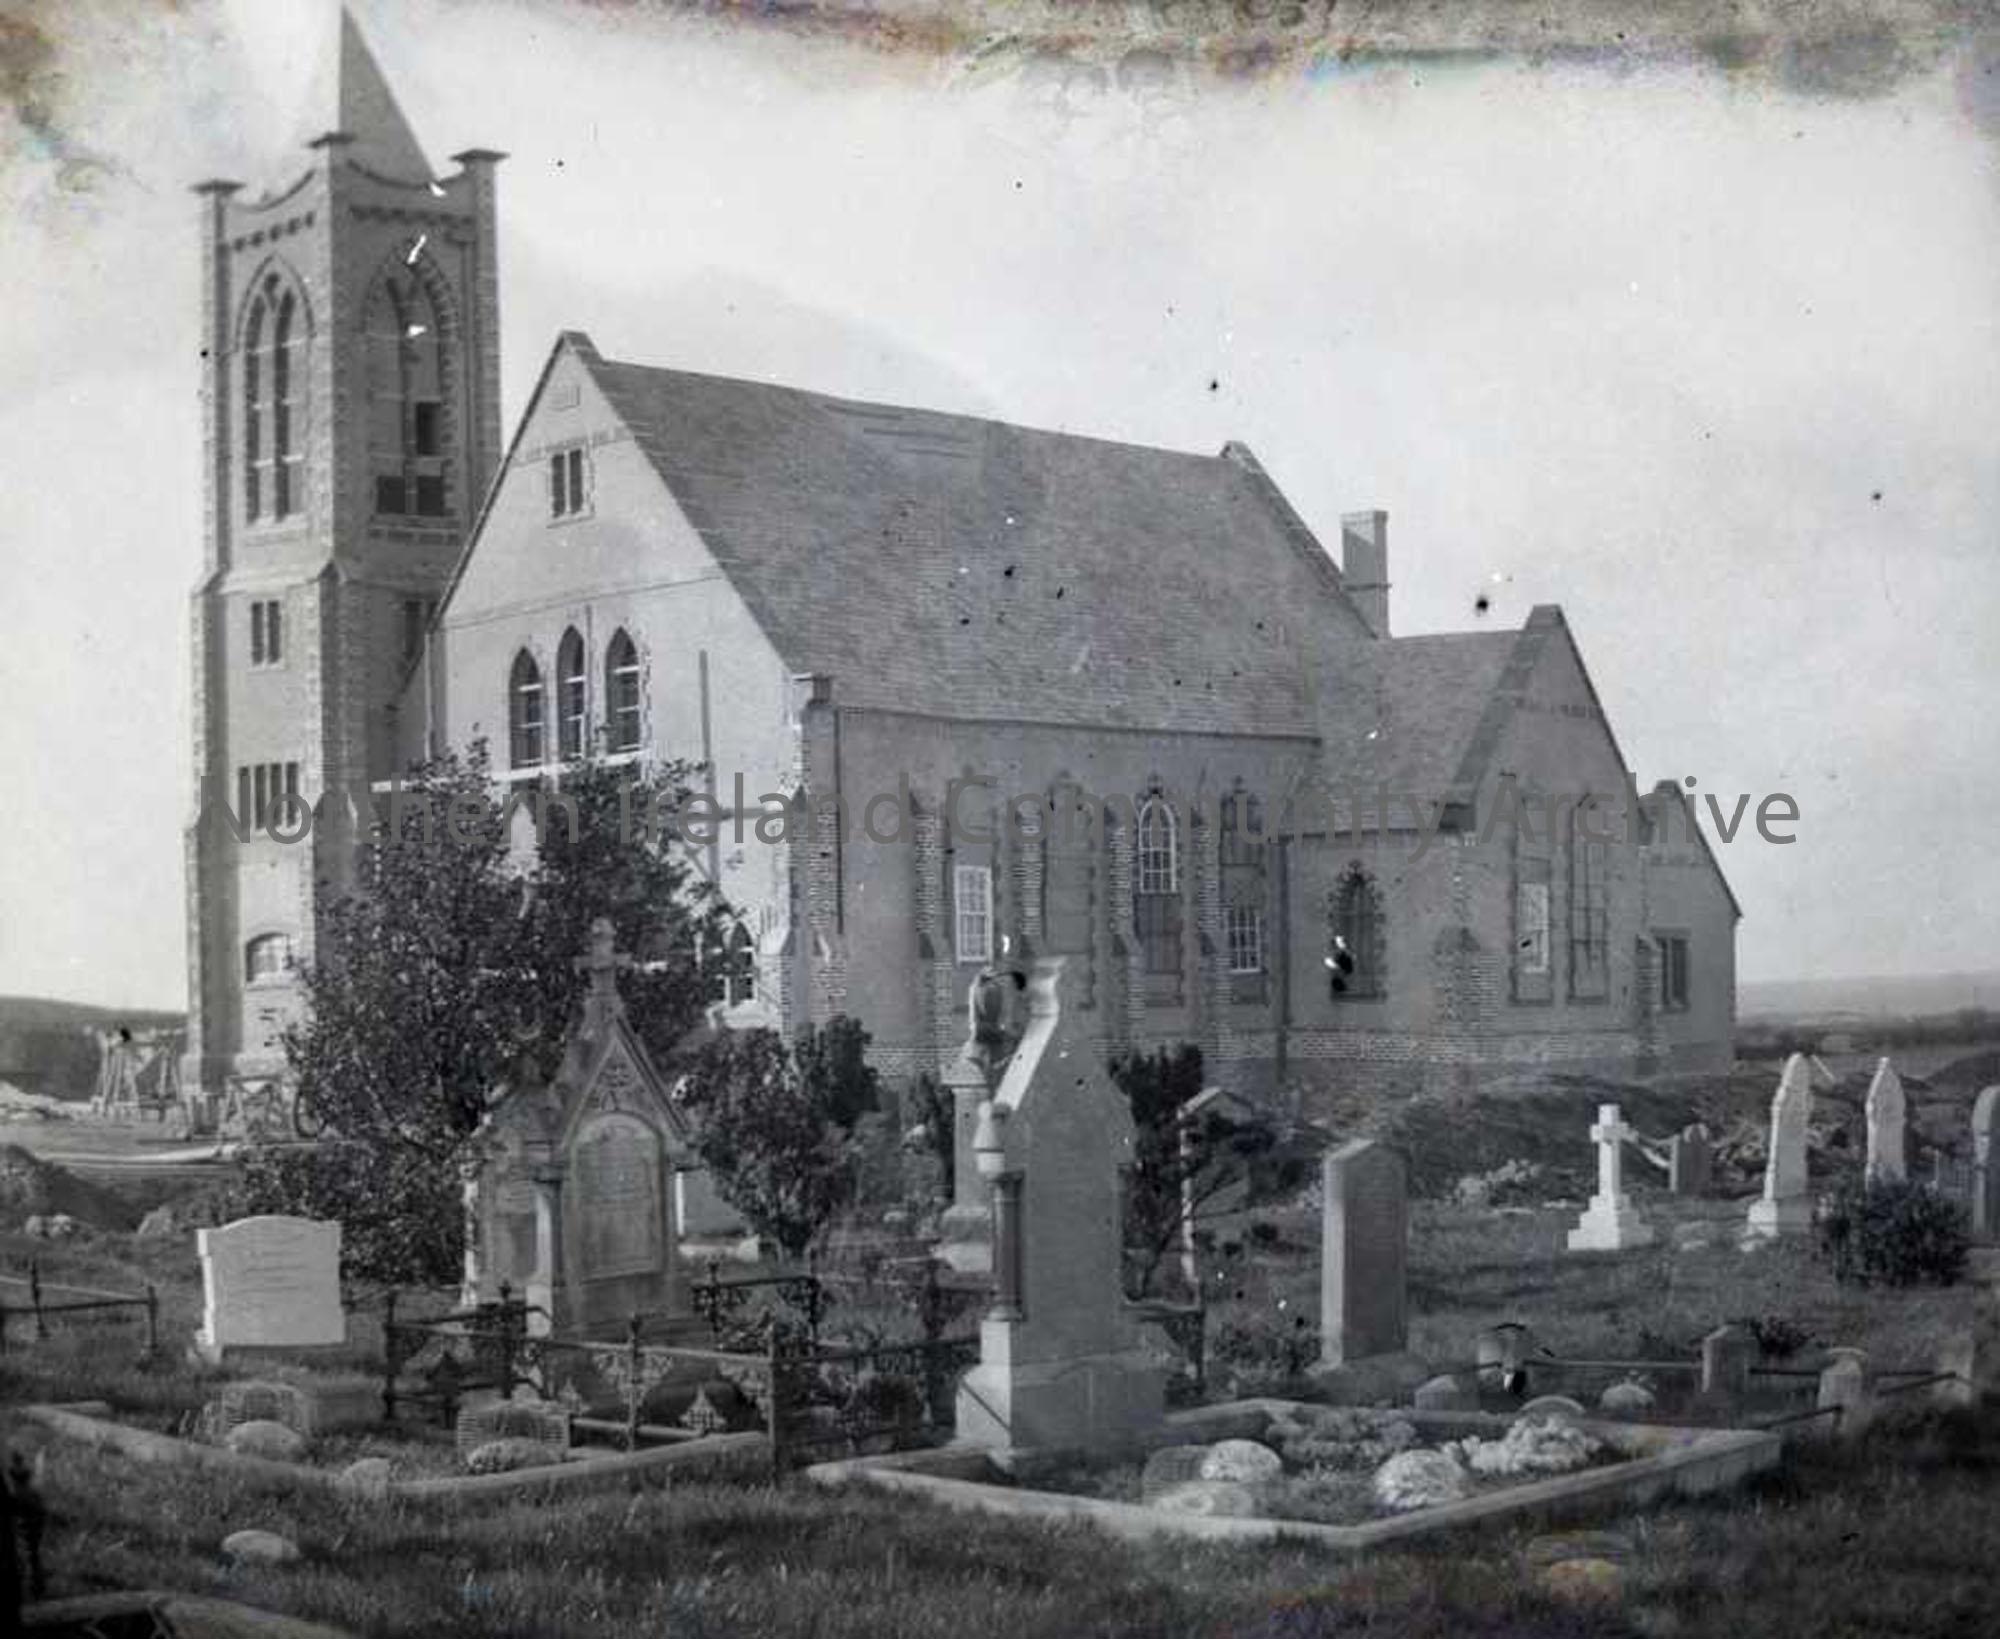 Dunboe Presbyterian Church (as titled by Sam Henry)